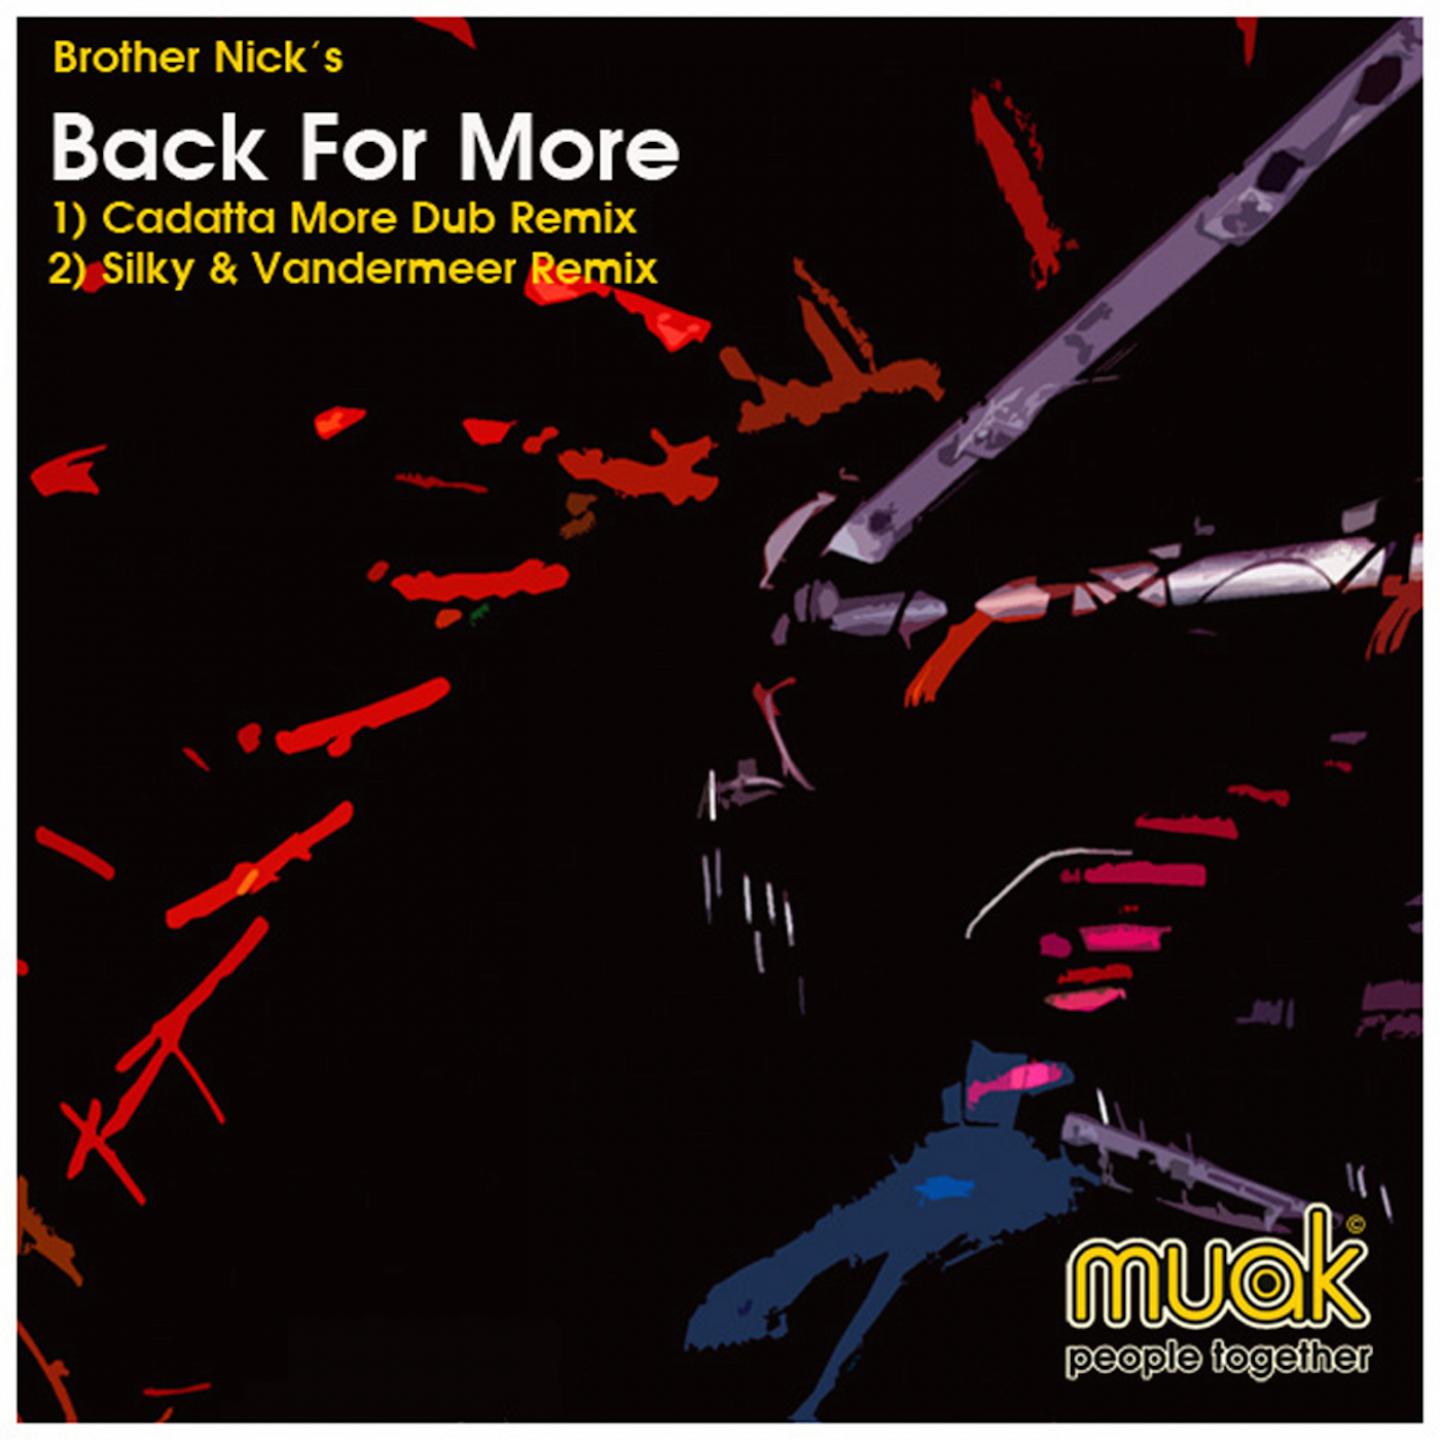 Back for More (Cadatta More Dub)